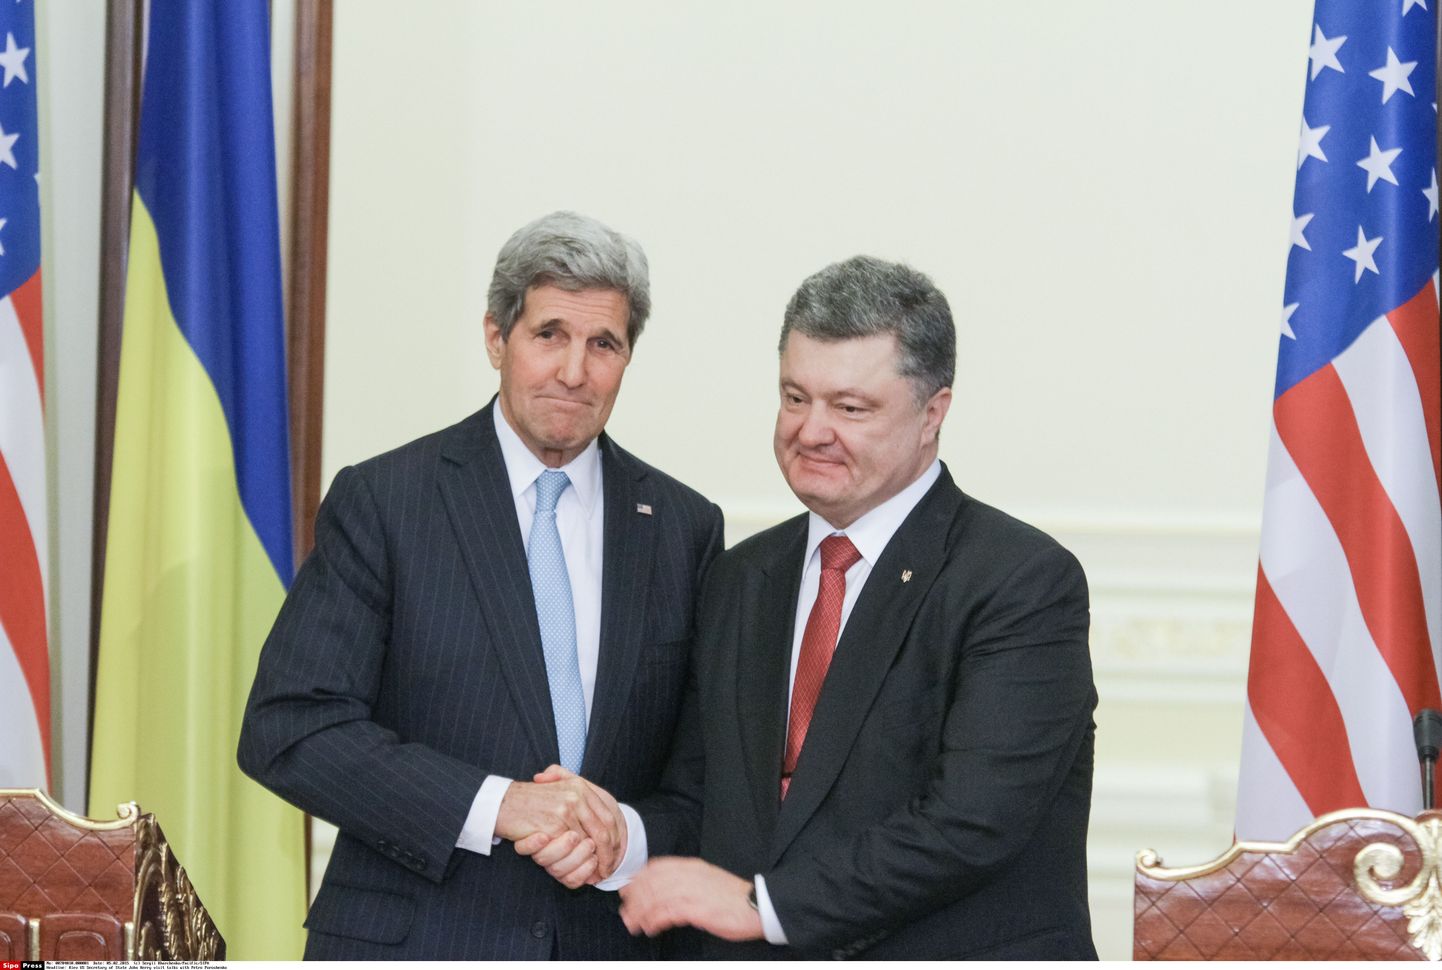 Ühendriikide välisminister John Kerry ja Ukraina president Petro Porošenko.